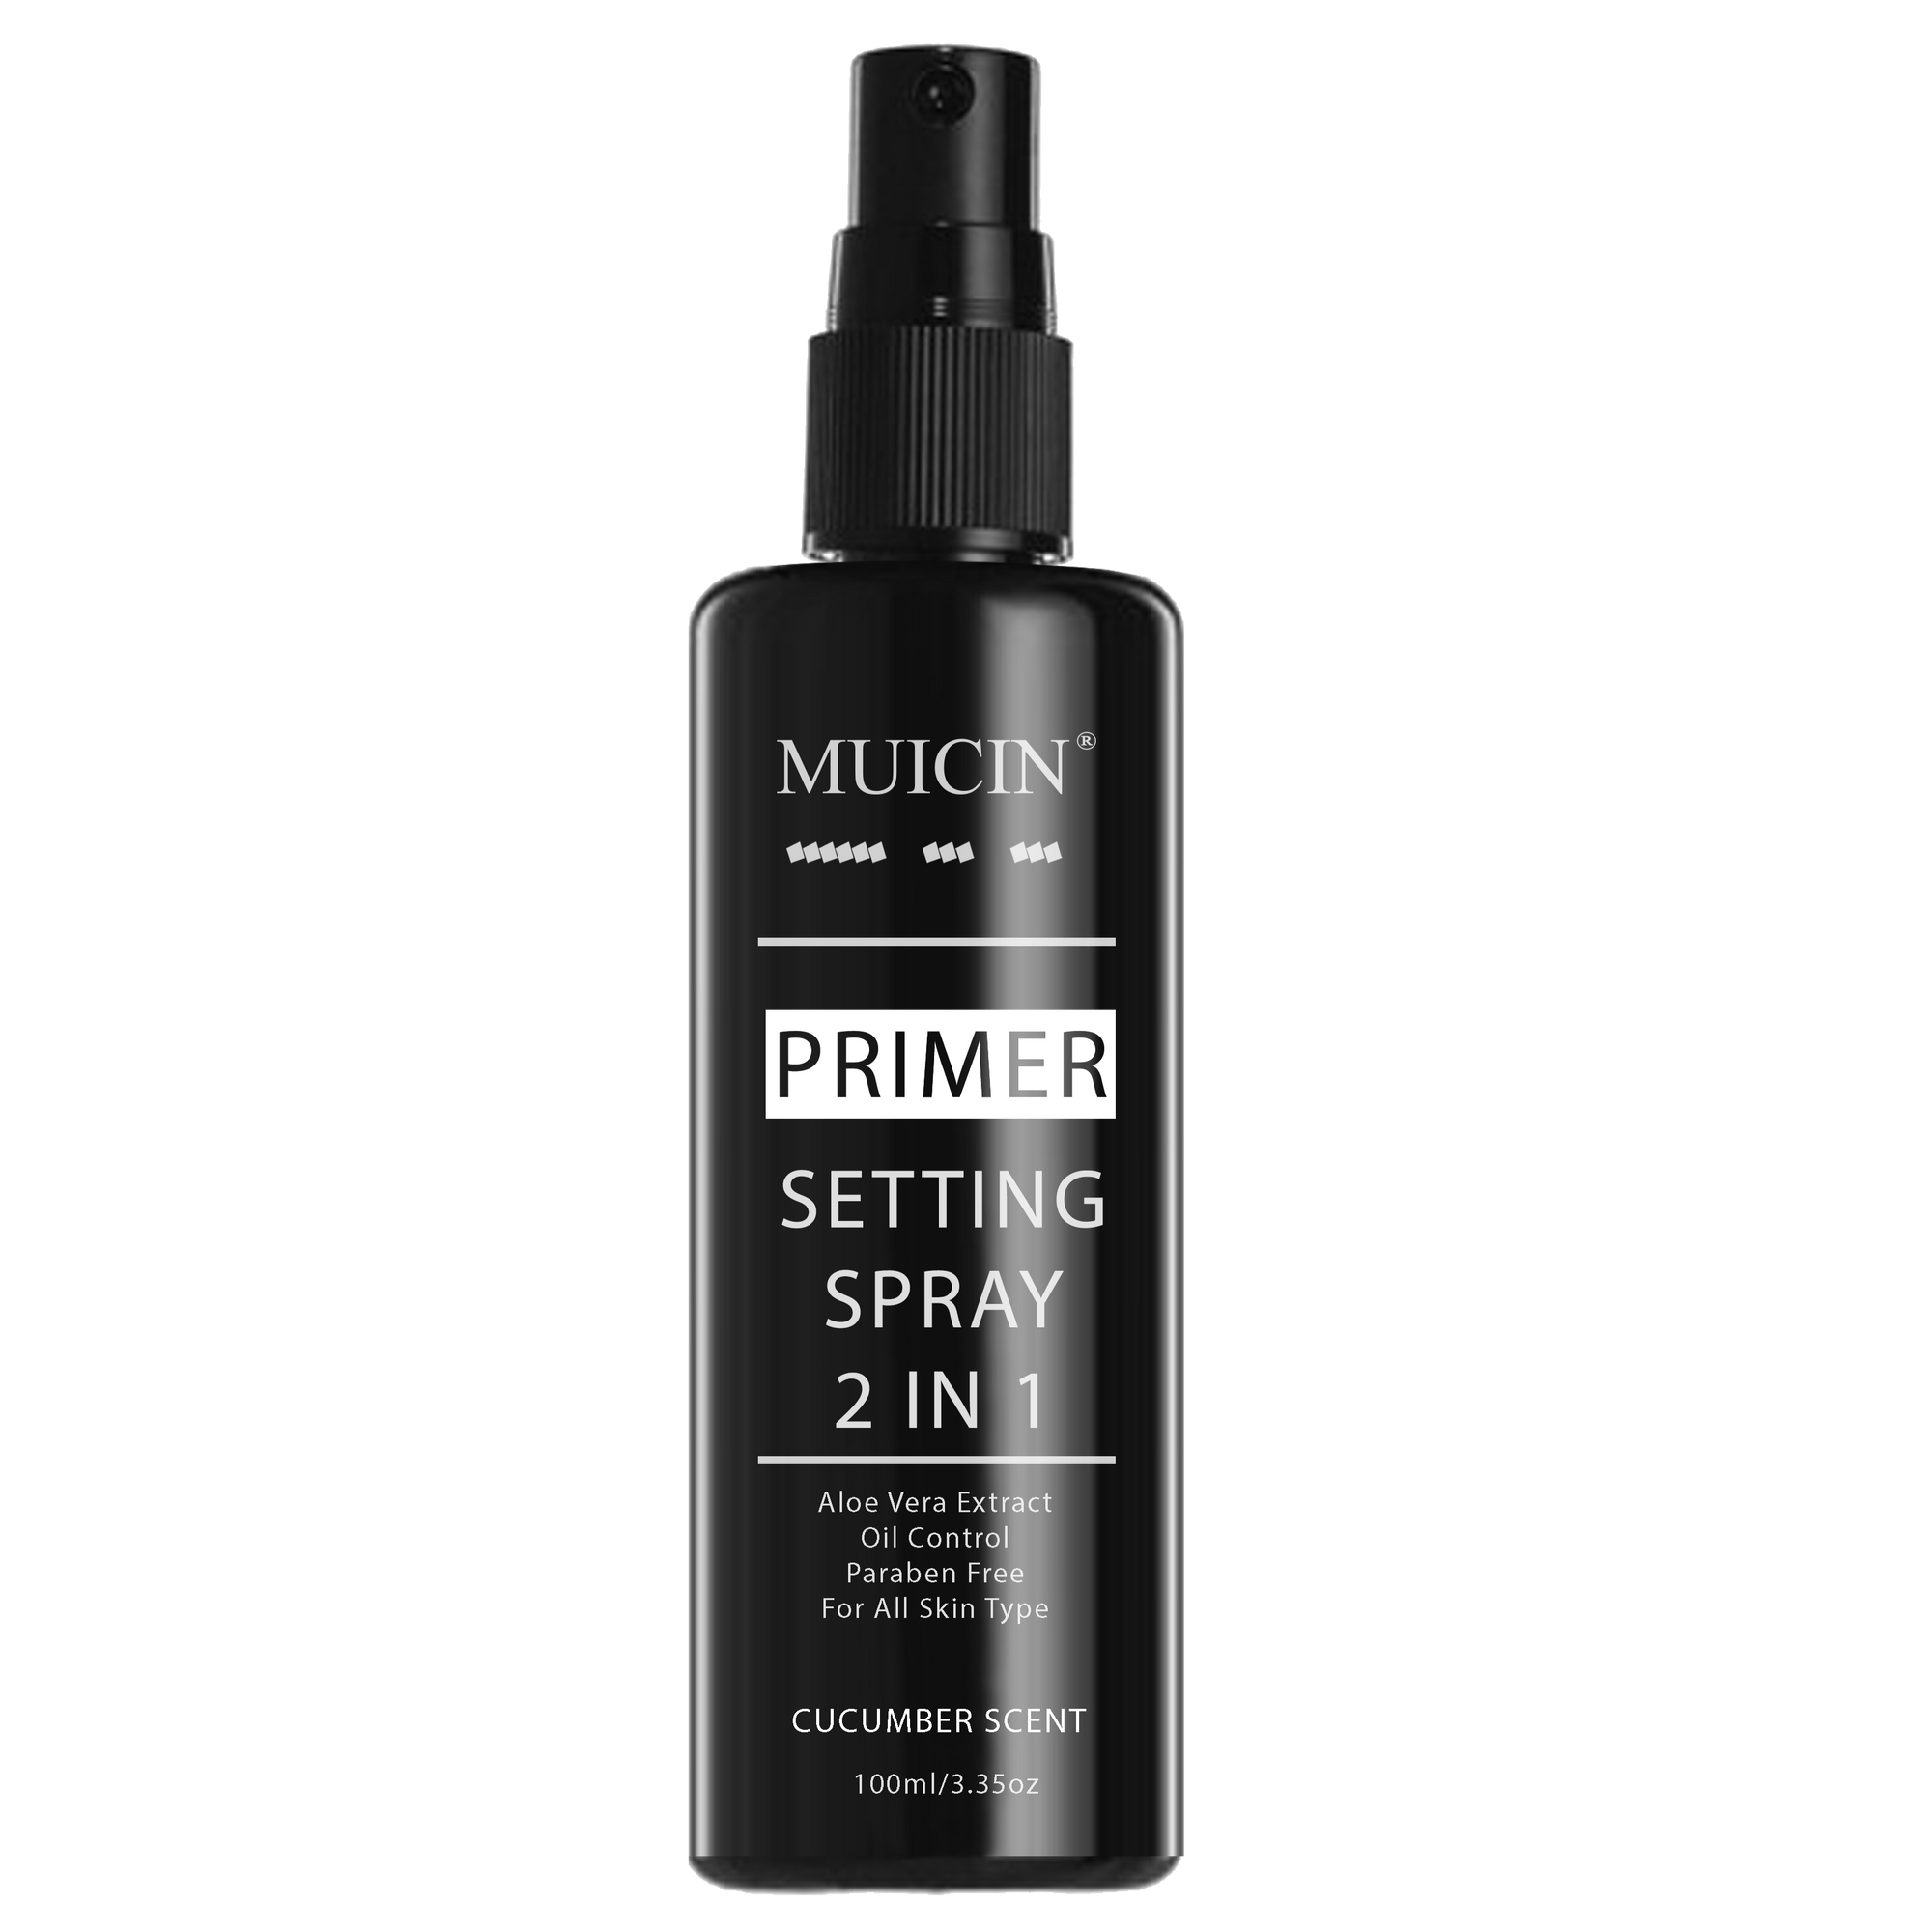 Buy  MUICIN - 2 in 1 Primer Setting Spray - 100ml - at Best Price Online in Pakistan